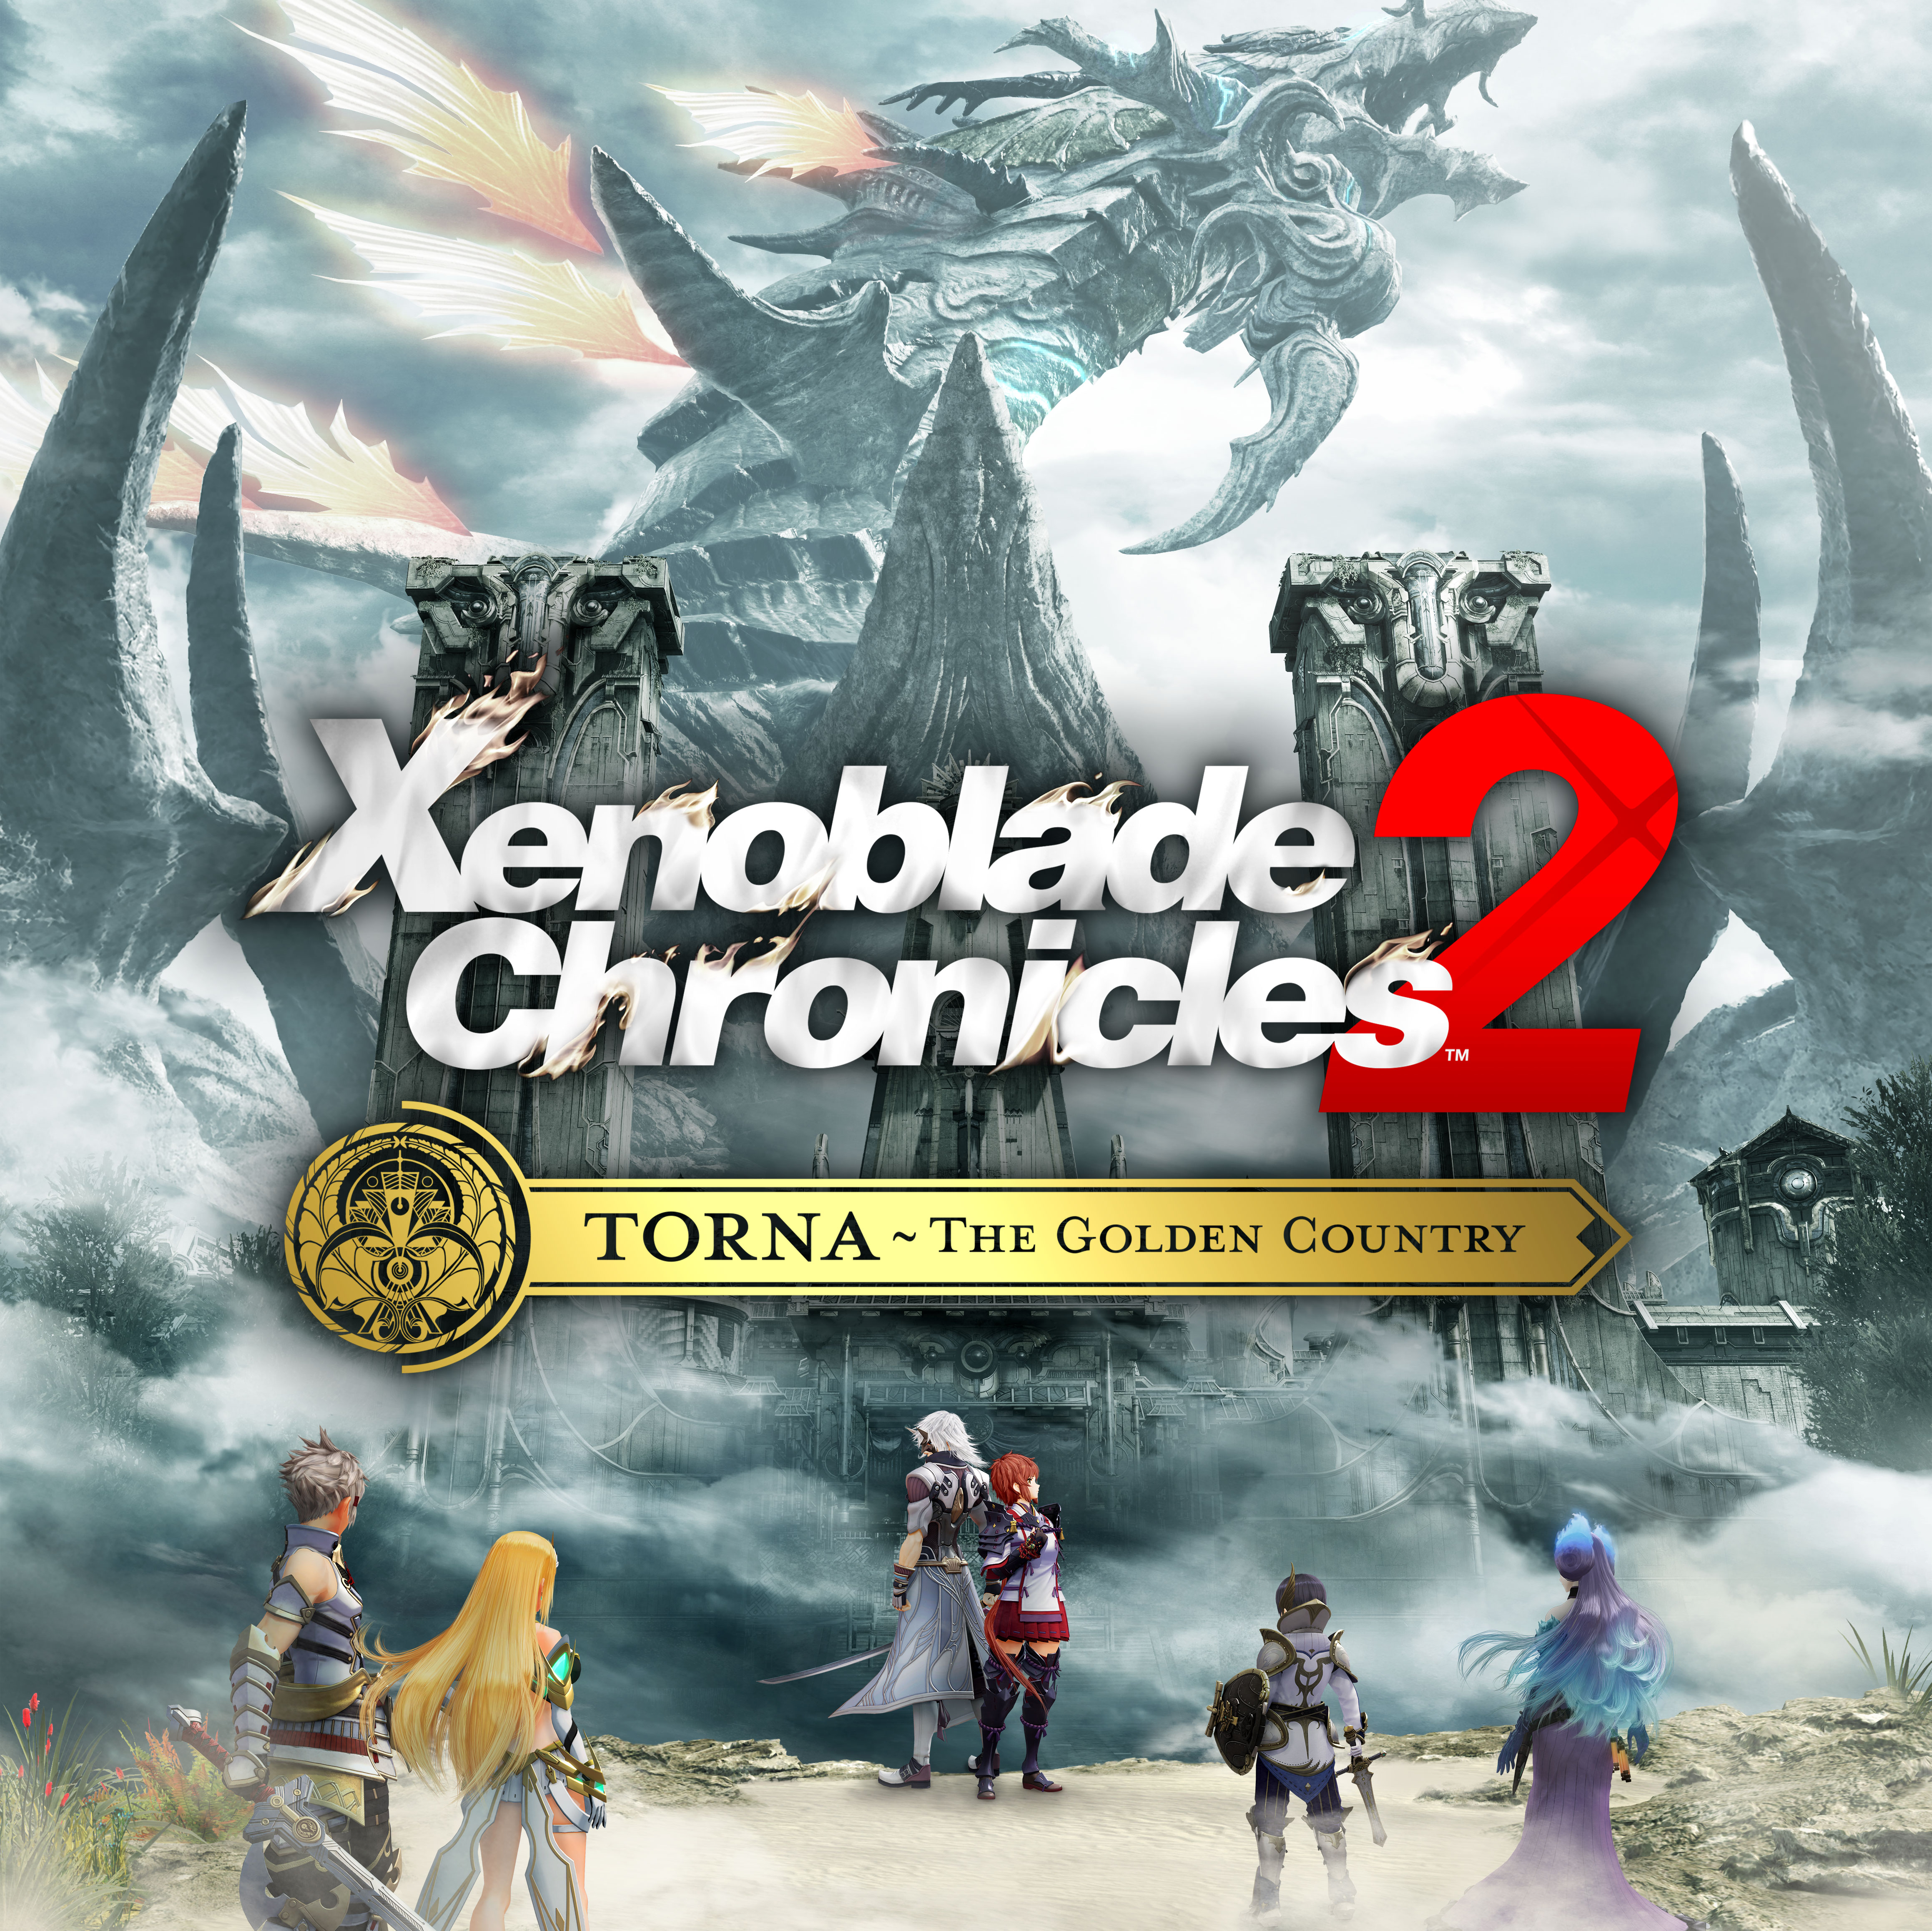 Tetsuya Takahashi van Monolith Soft onthult meer van Xenoblade Chronicles 2: Torna - The Golden Country